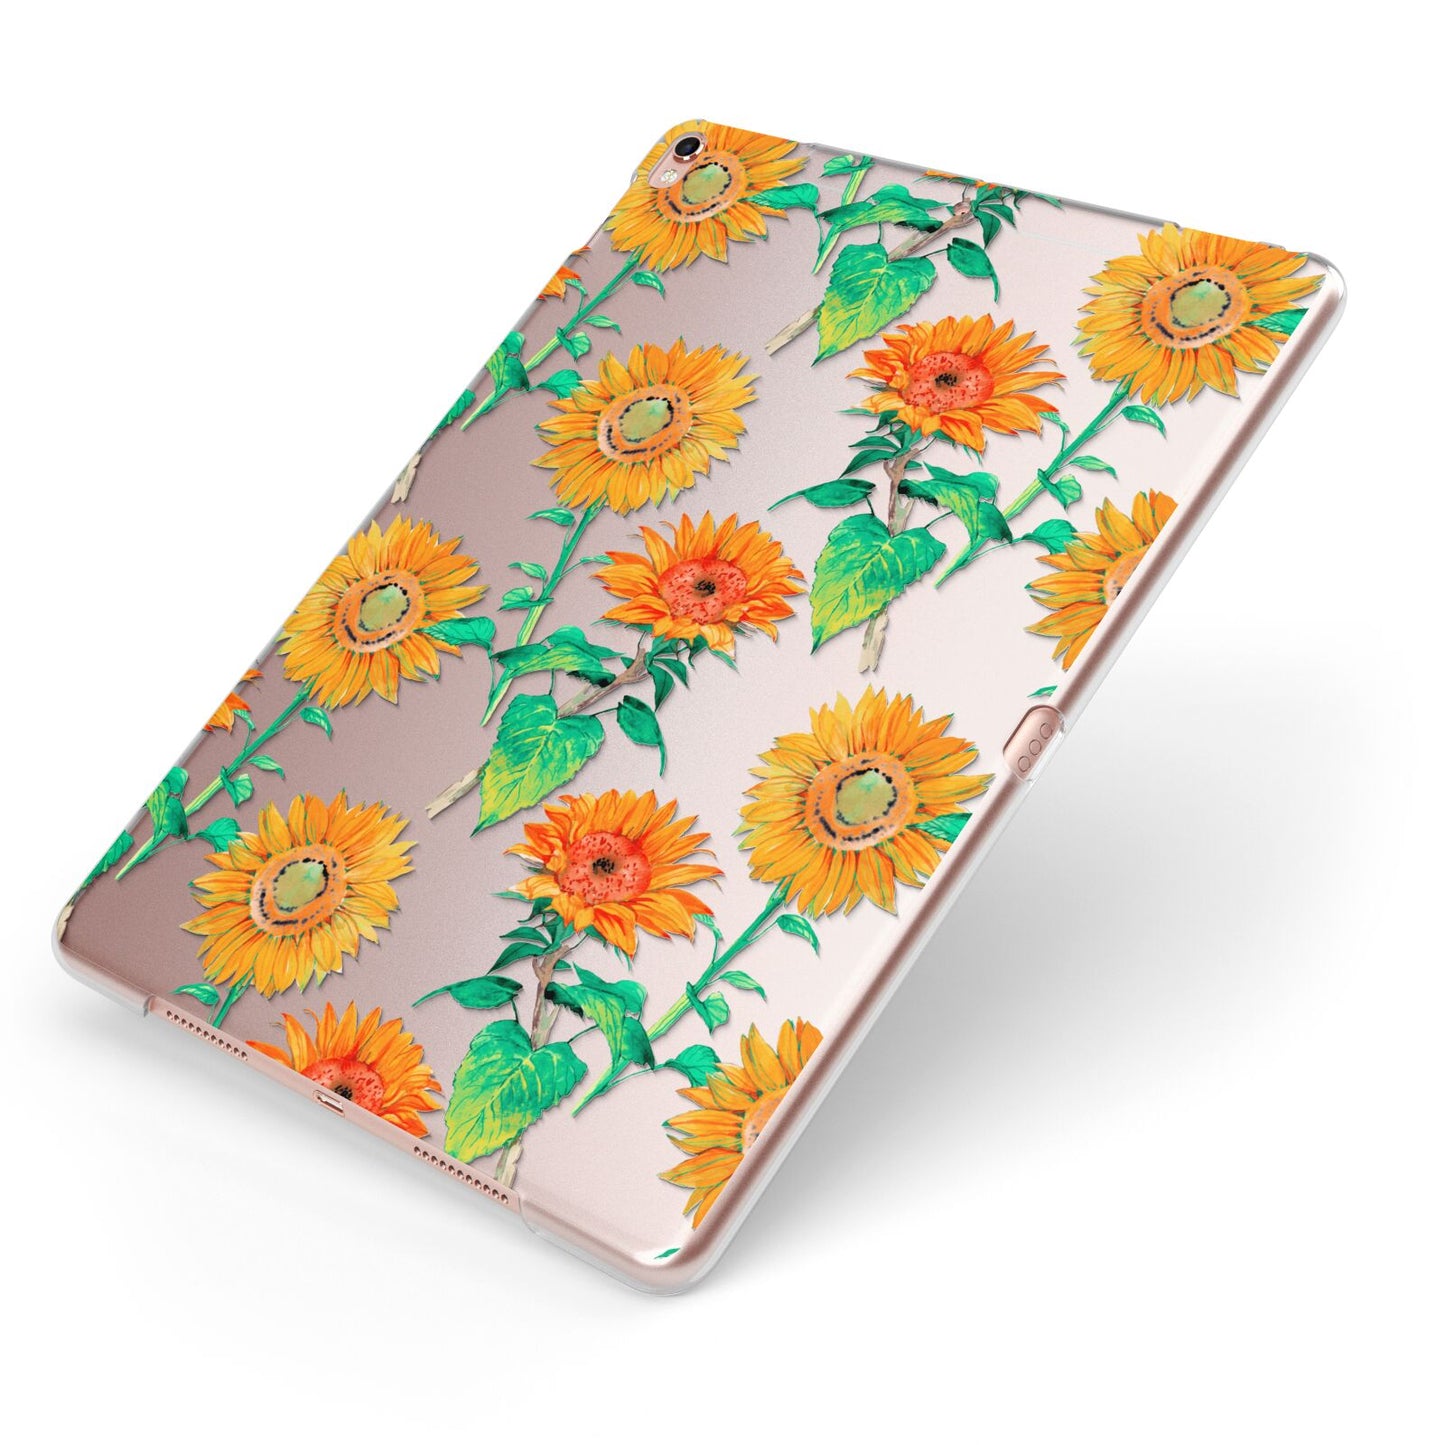 Sunflower Pattern Apple iPad Case on Rose Gold iPad Side View